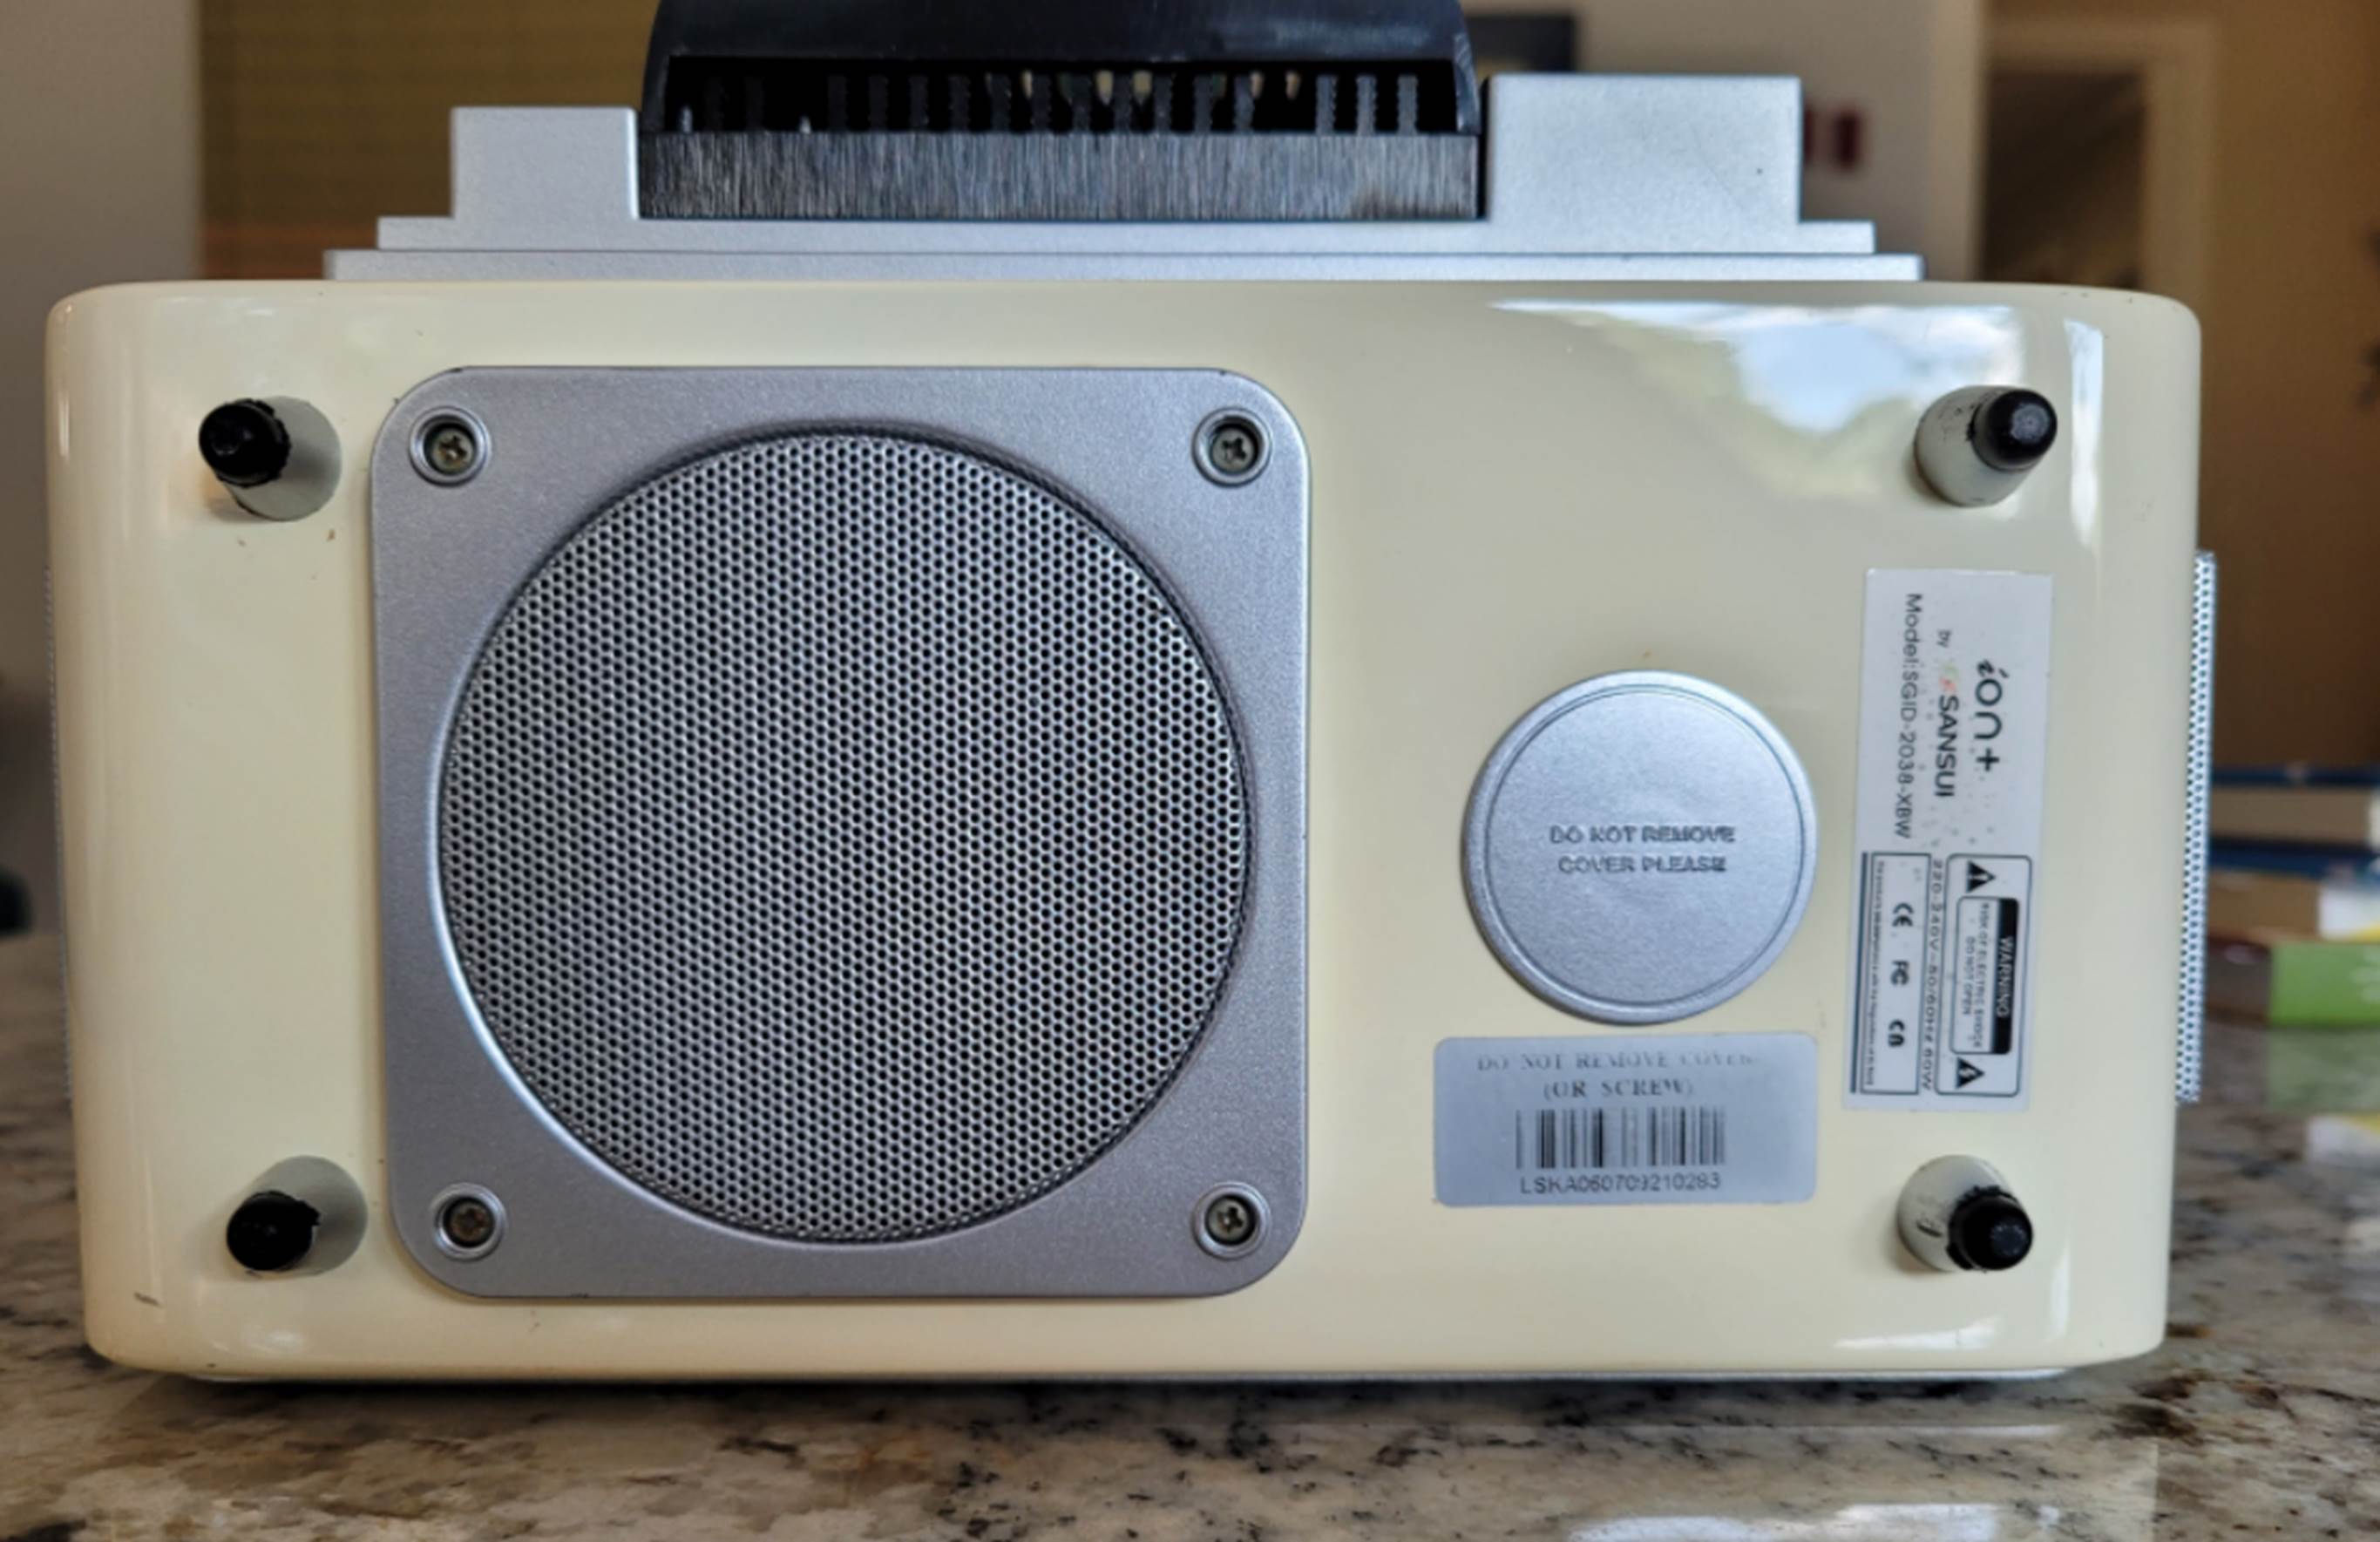 A white and silver radio

Description automatically generated